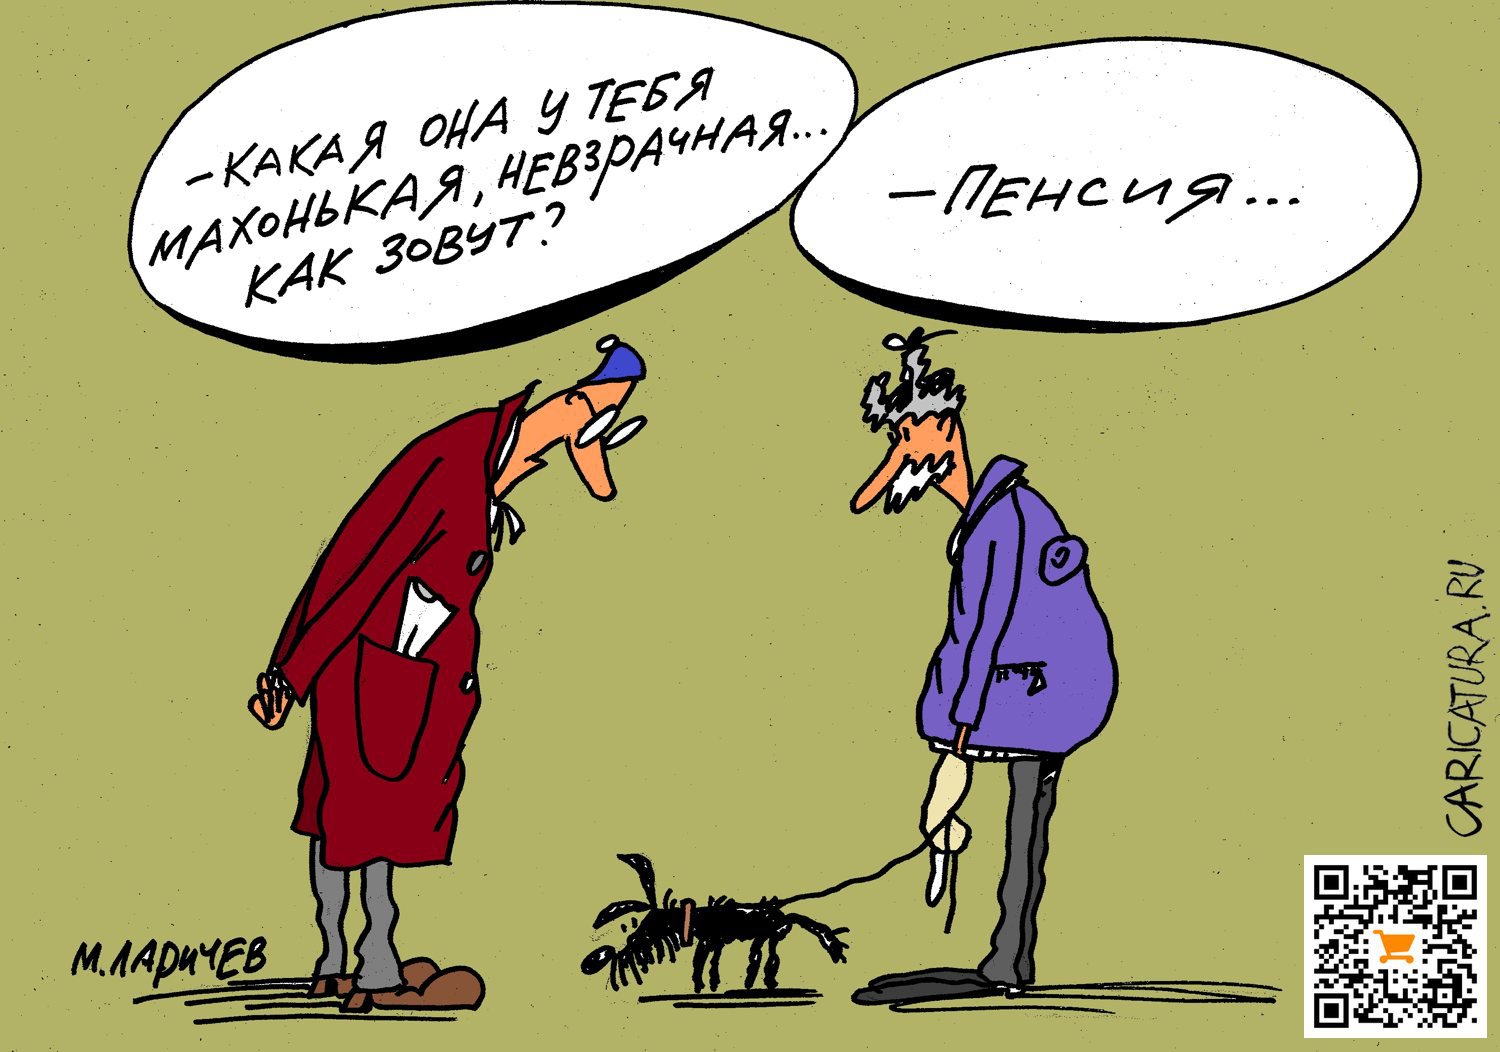 Карикатура "Пенсия", Михаил Ларичев